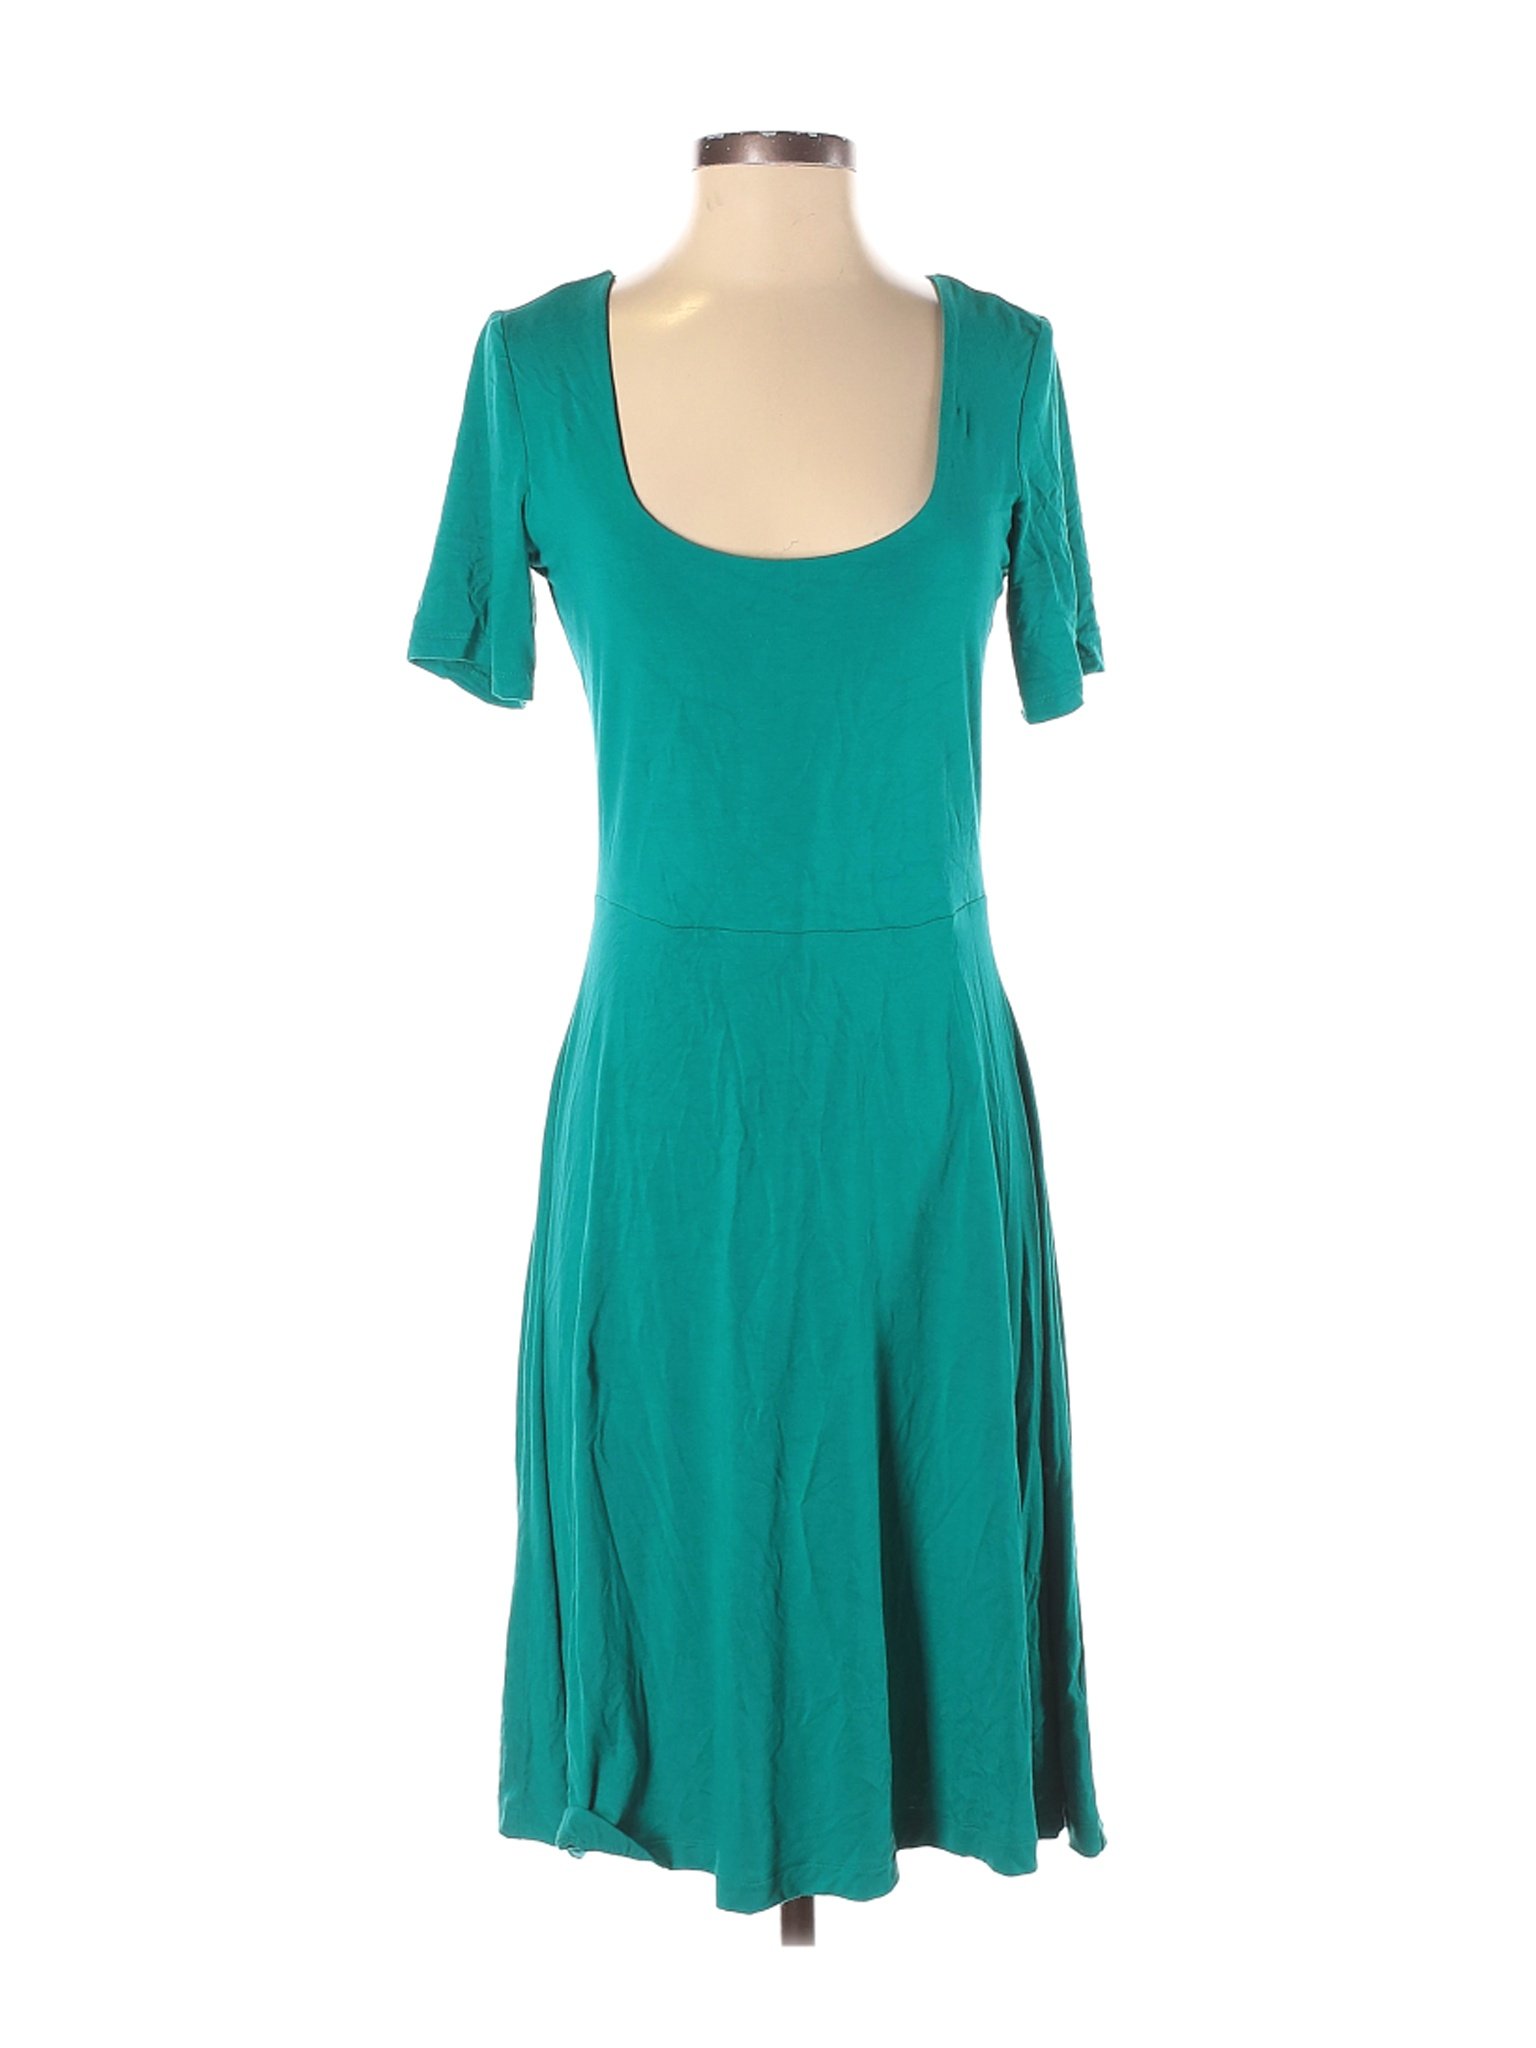 Old Navy Women Green Casual Dress S Tall | eBay